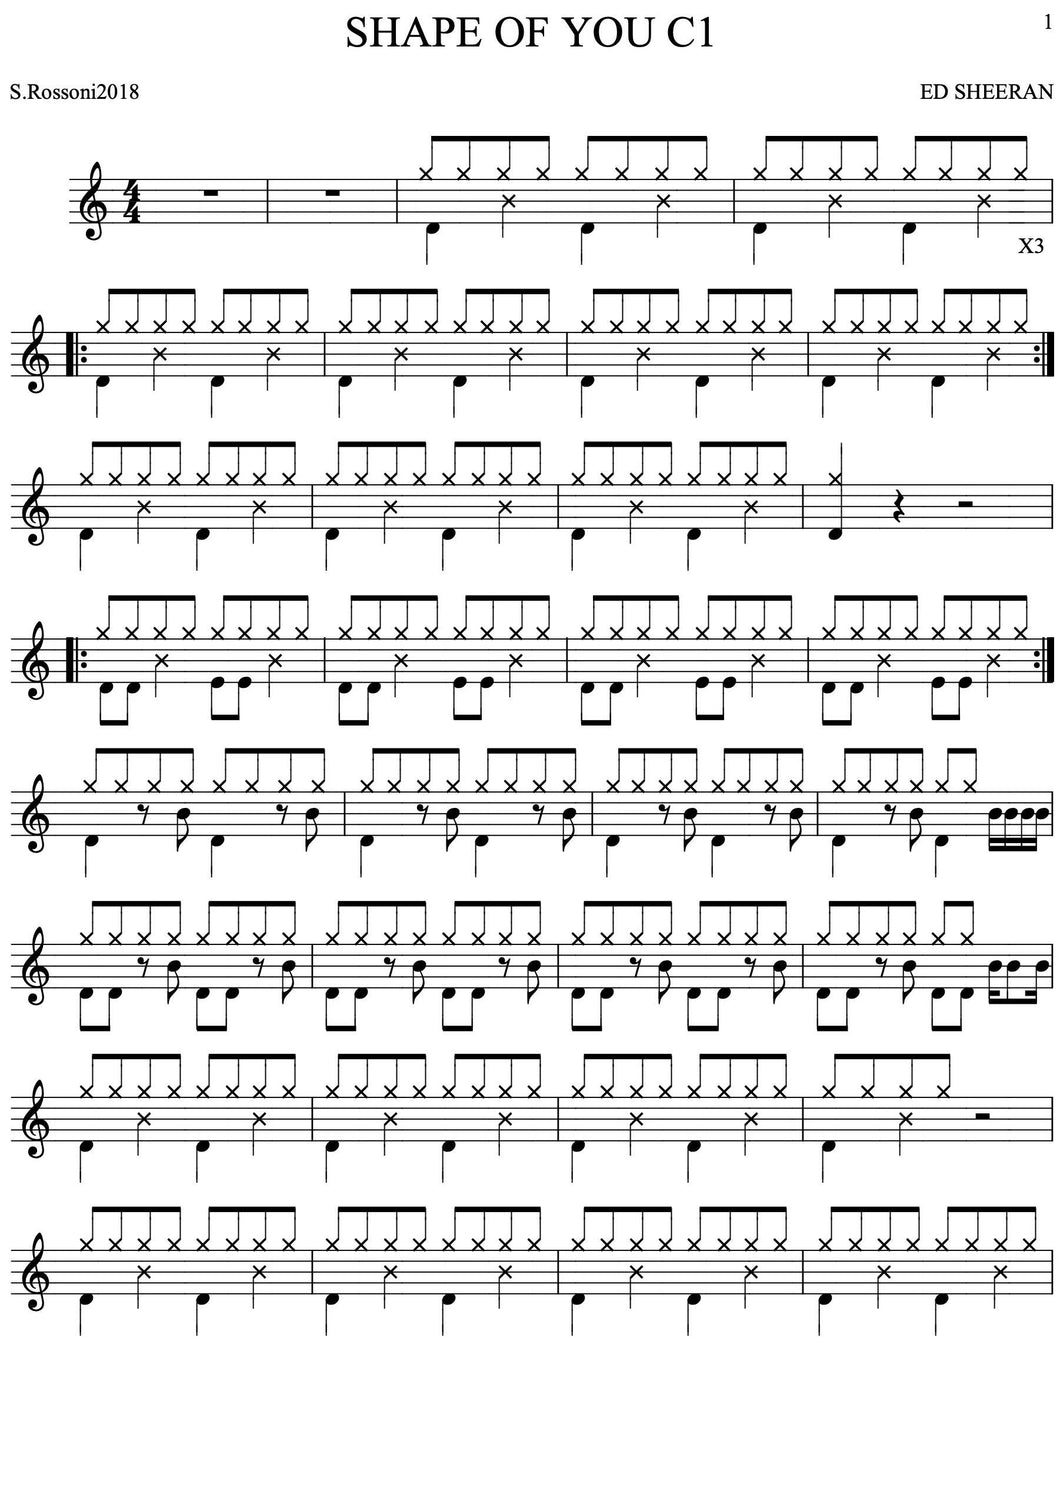 Shape of You - Ed Sheeran - Simplified Drum Transcription / Drum Sheet Music - Rossoni